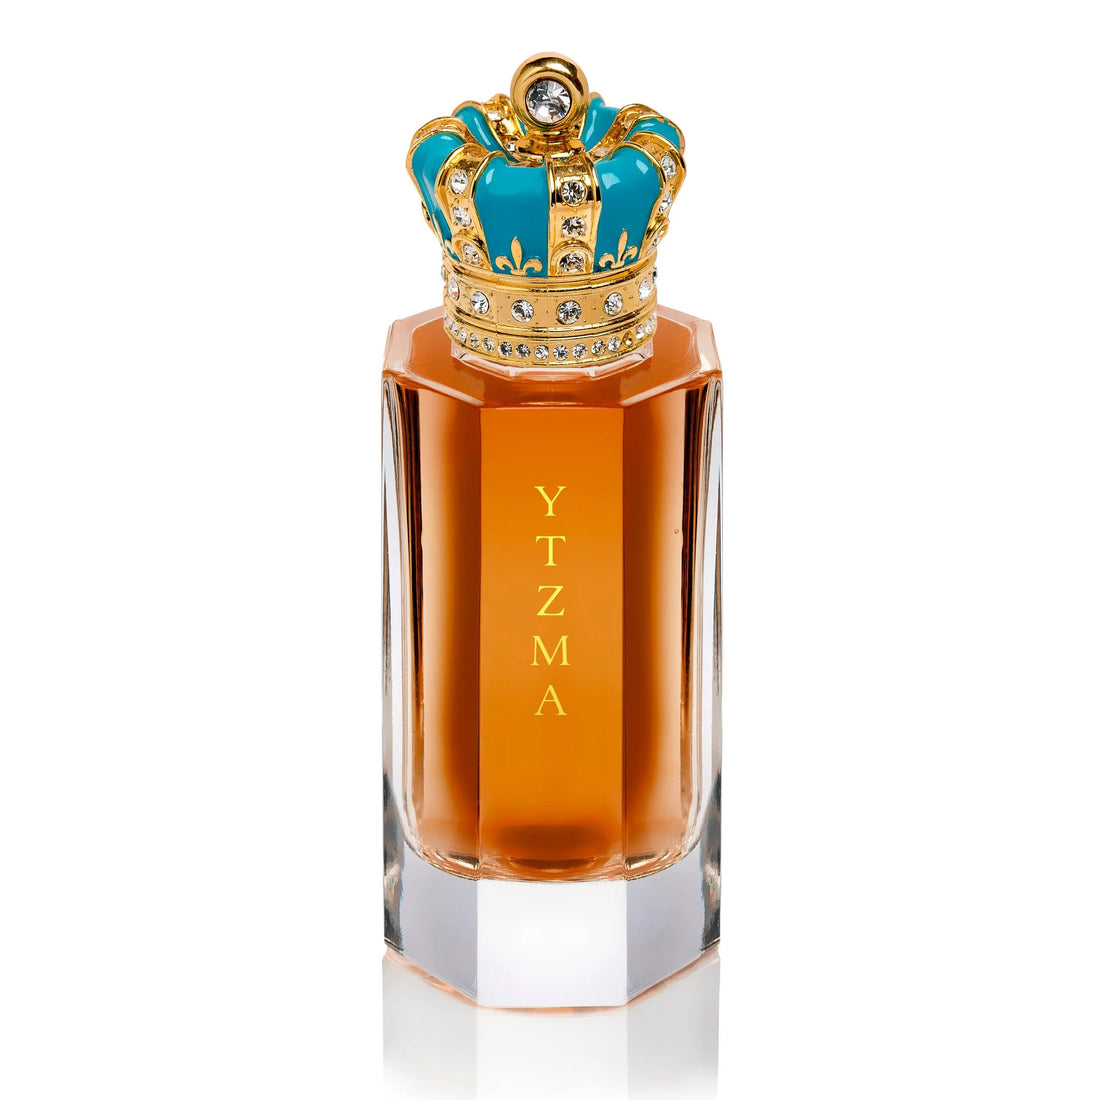 Ytzma Royal Crown - 50 ml